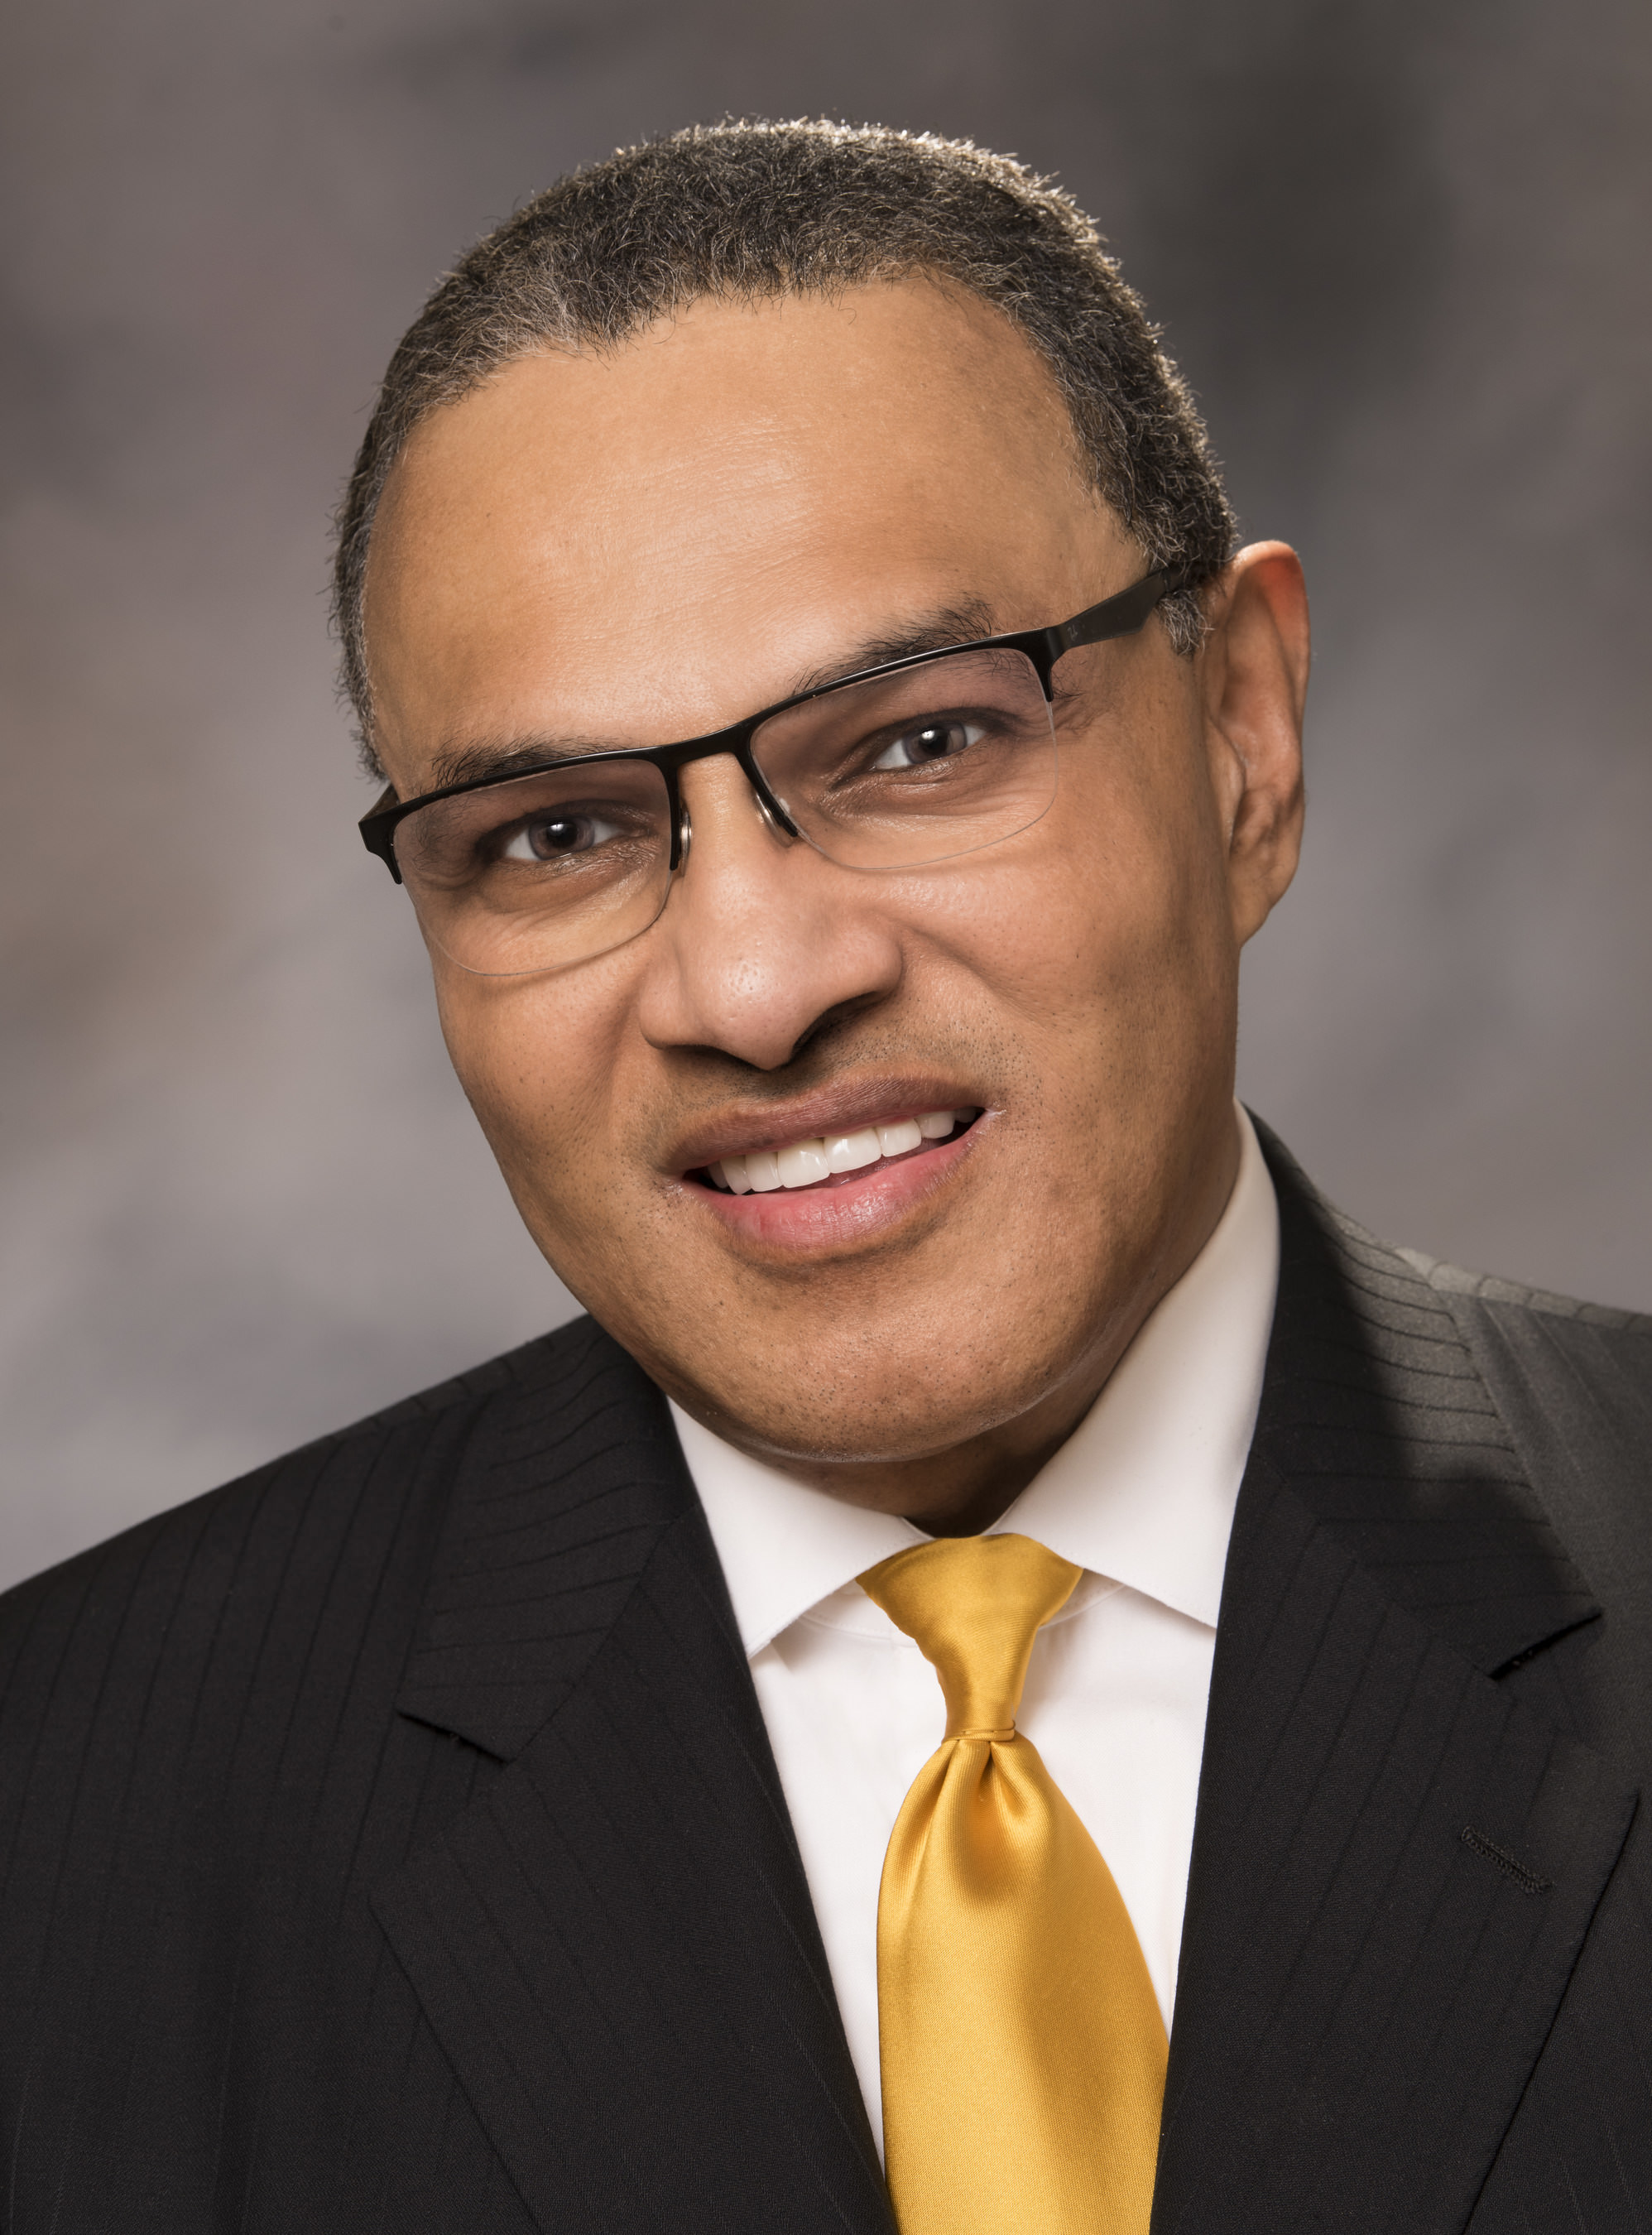 Headshot of Dr. Freeman A. Hrabowski III, President of the University of Maryland, Baltimore County (UMBC)